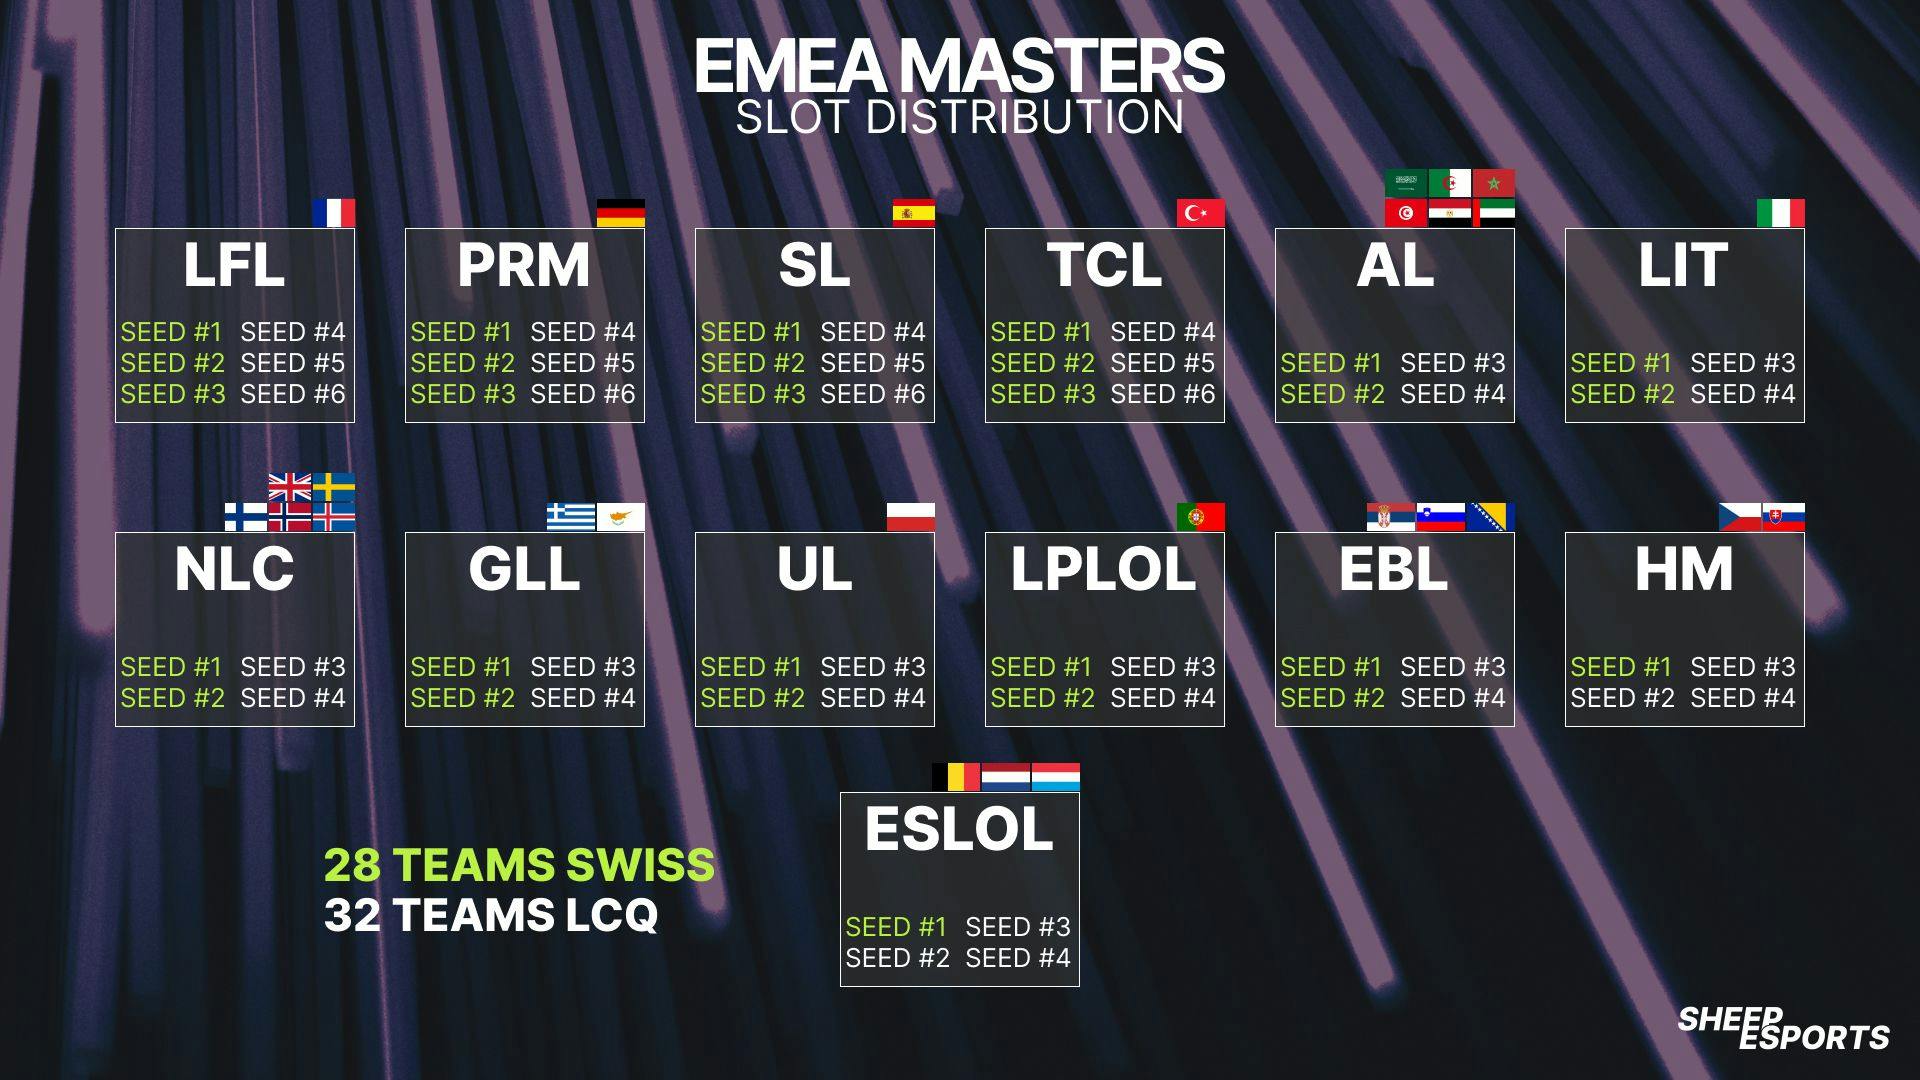 Sheep Esports representation of the new EMEA Masters slot distribution